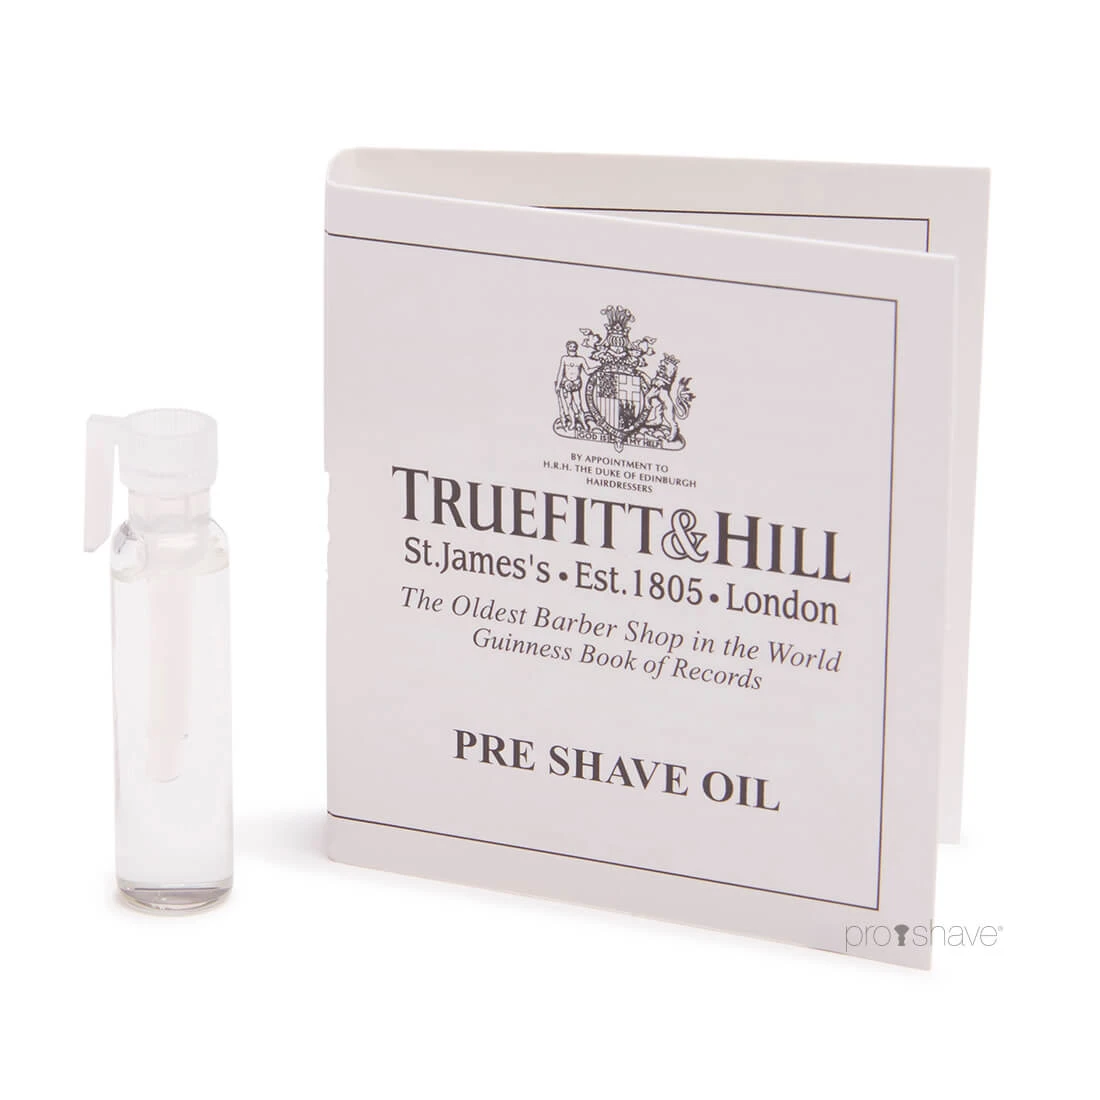 Sample on Preshave oil from Truefitt & Hill